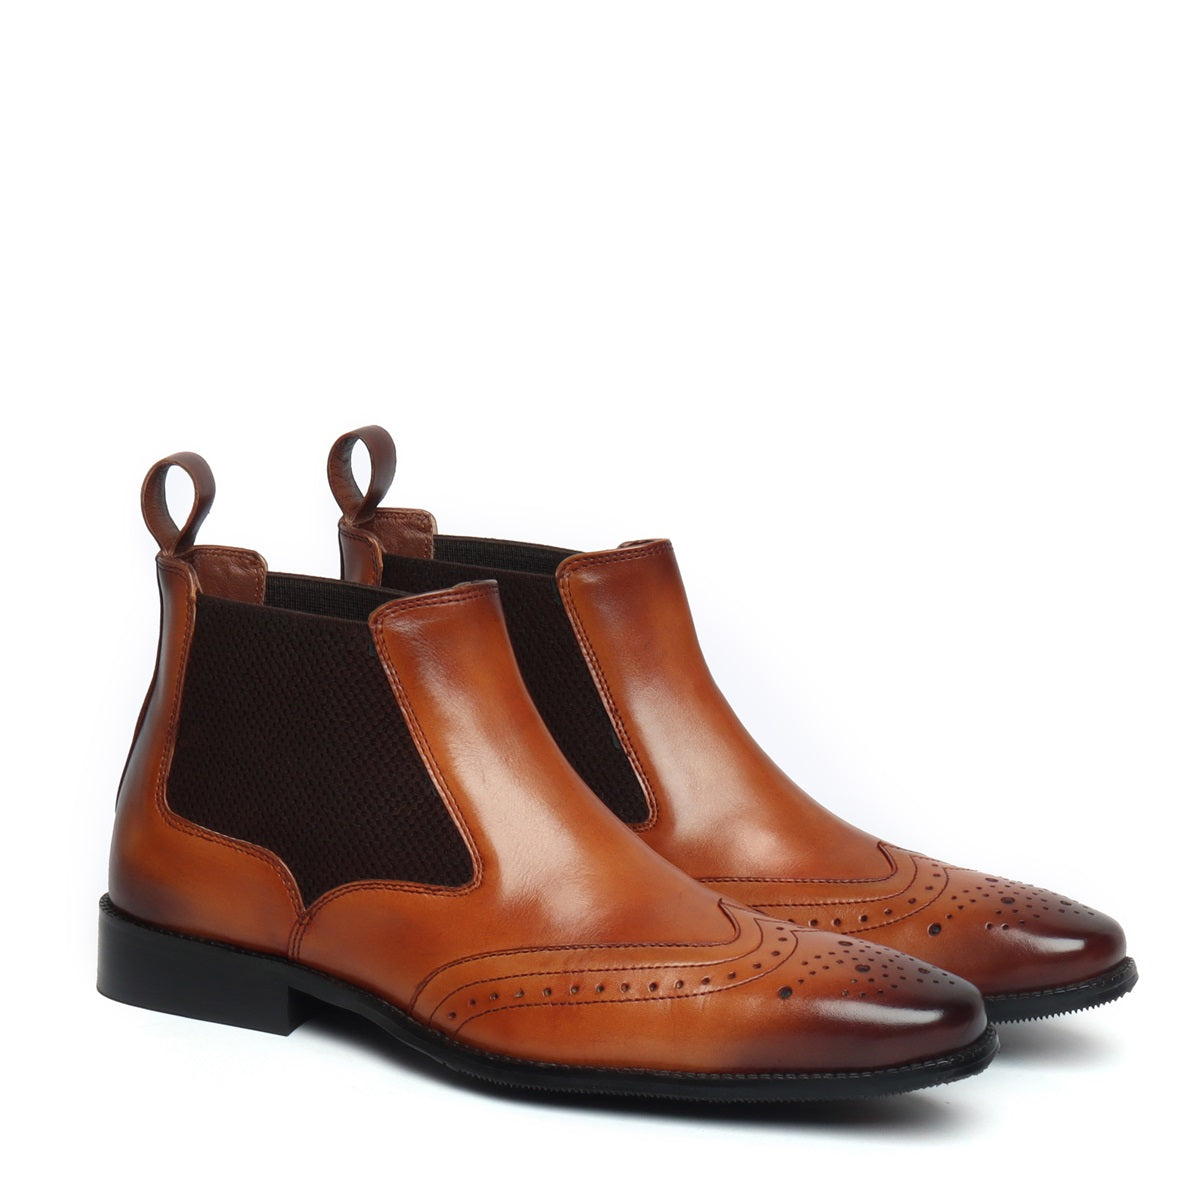 Tan Wingtip Quarter Brogue Leather Boots by BRUNE & BARESKIN